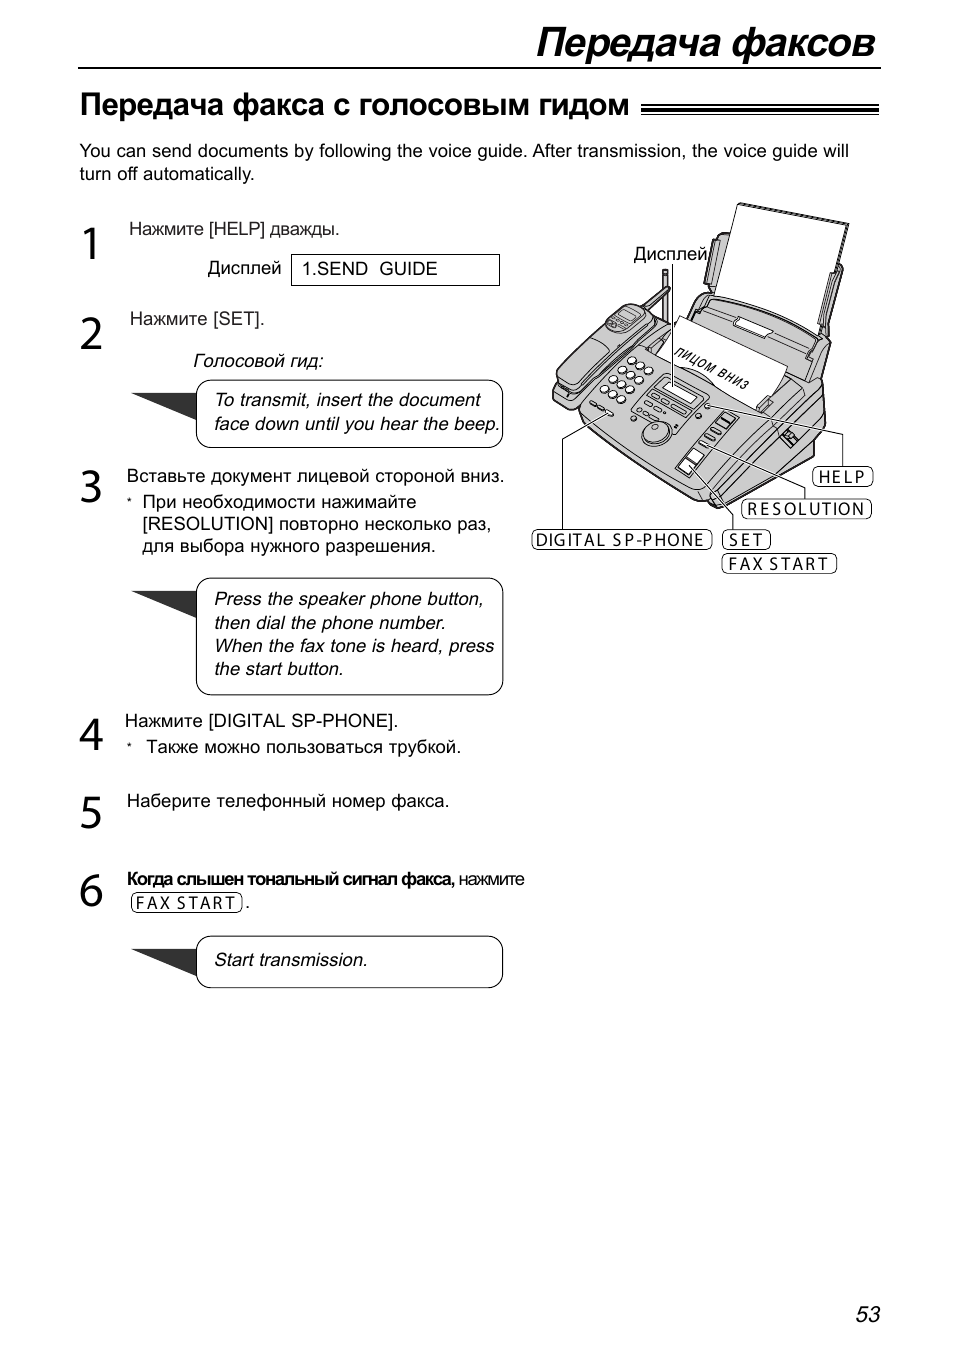 Инструкция по эксплуатации факса panasonic panasonic